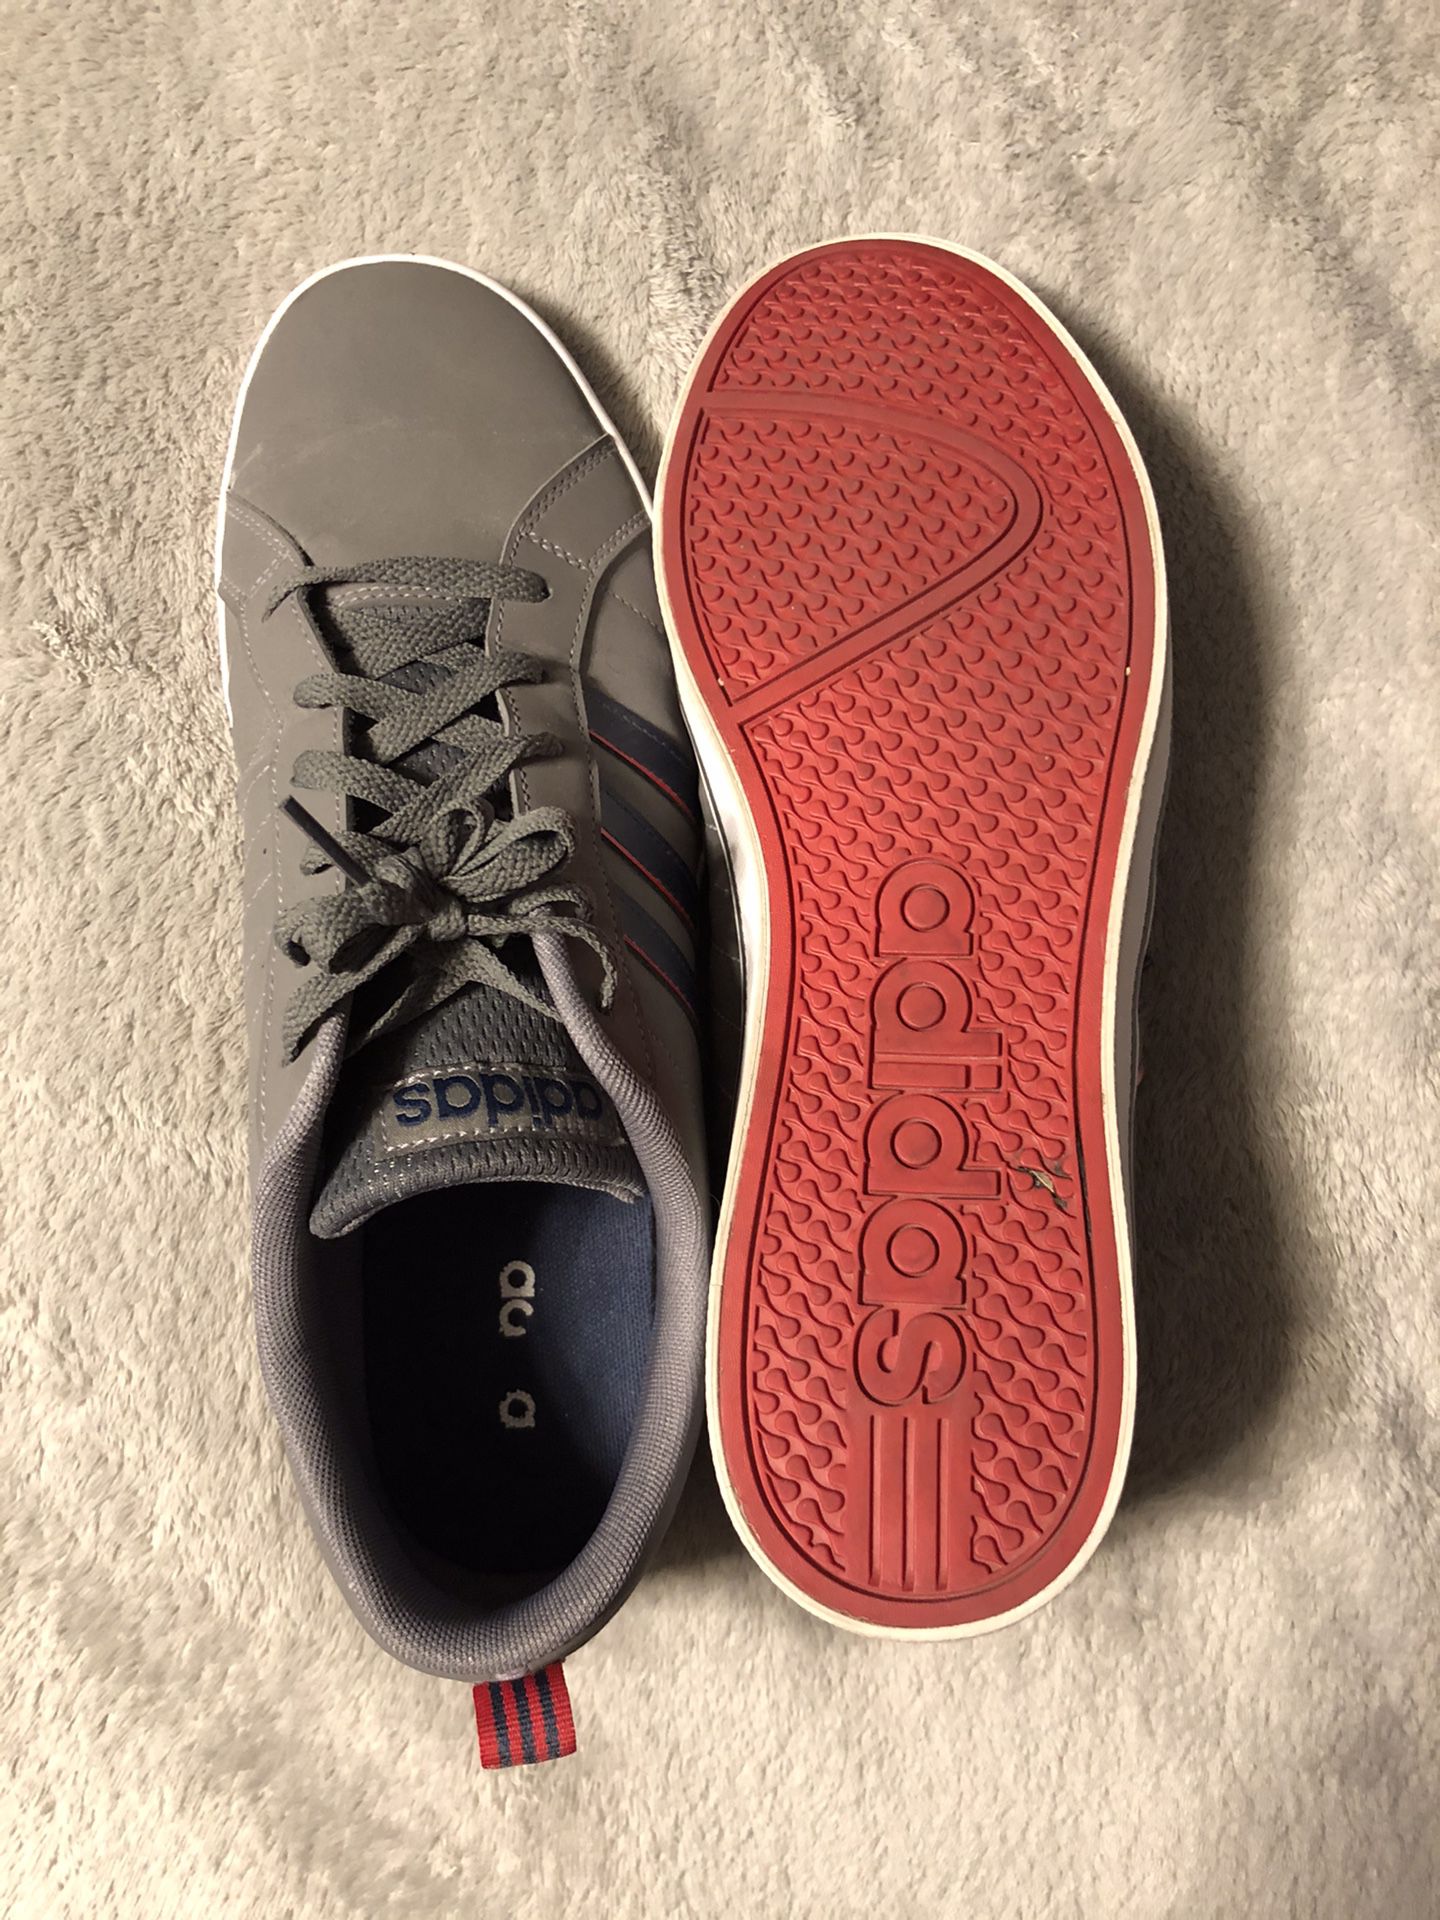 Adidas classics red sole size 12 men